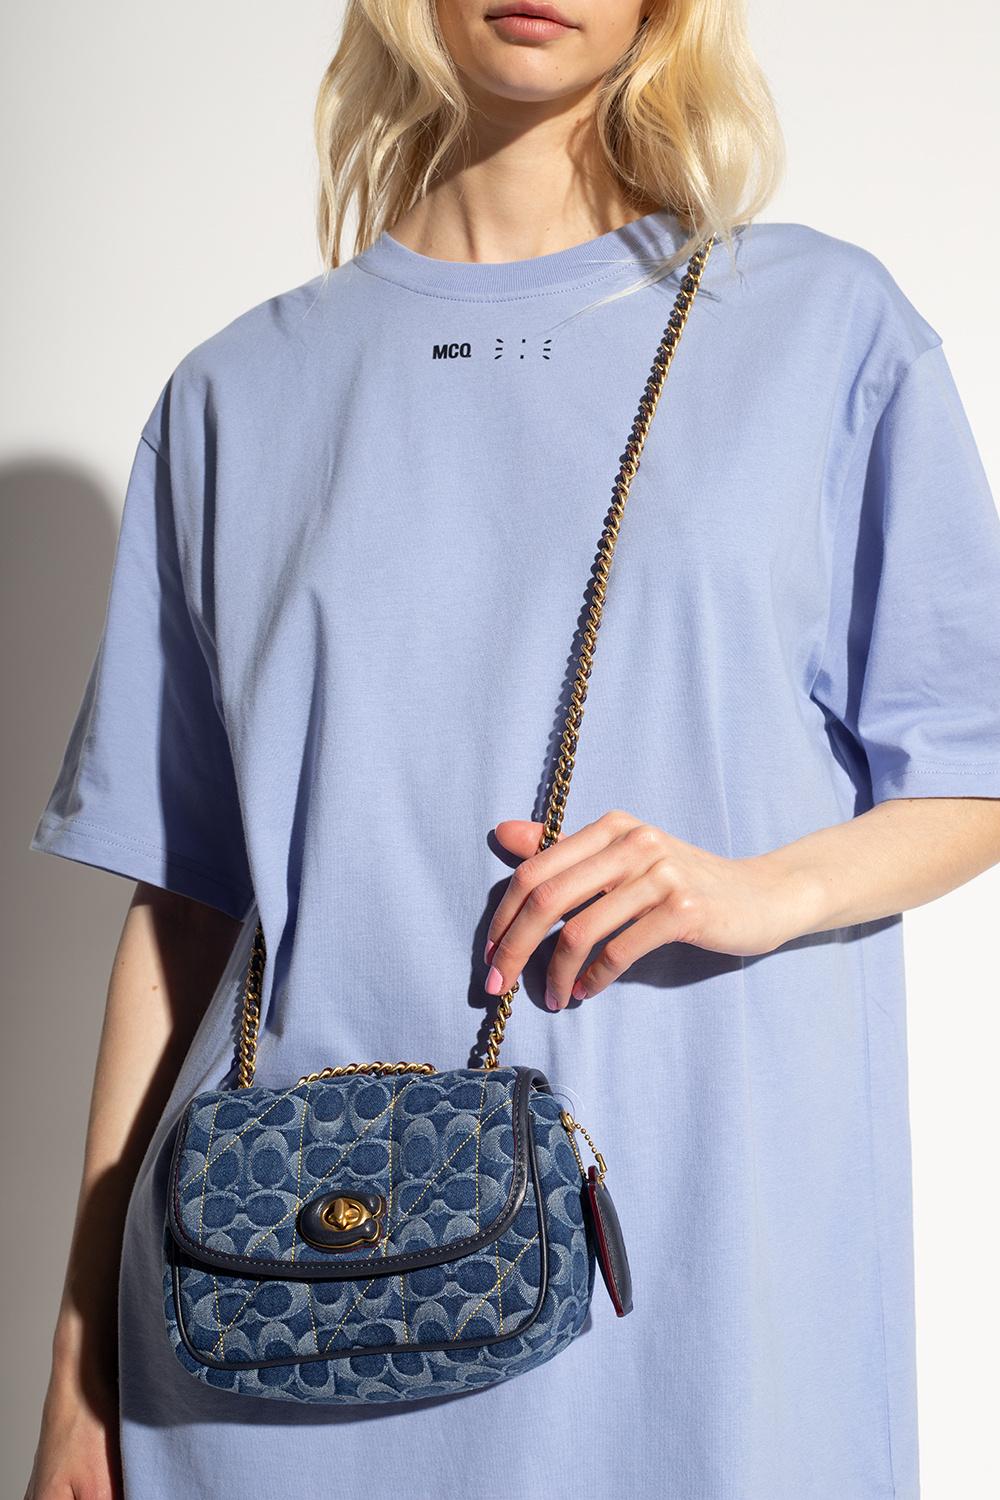 COACH 'pillow Madison' Shoulder Bag in Blue | Lyst Australia